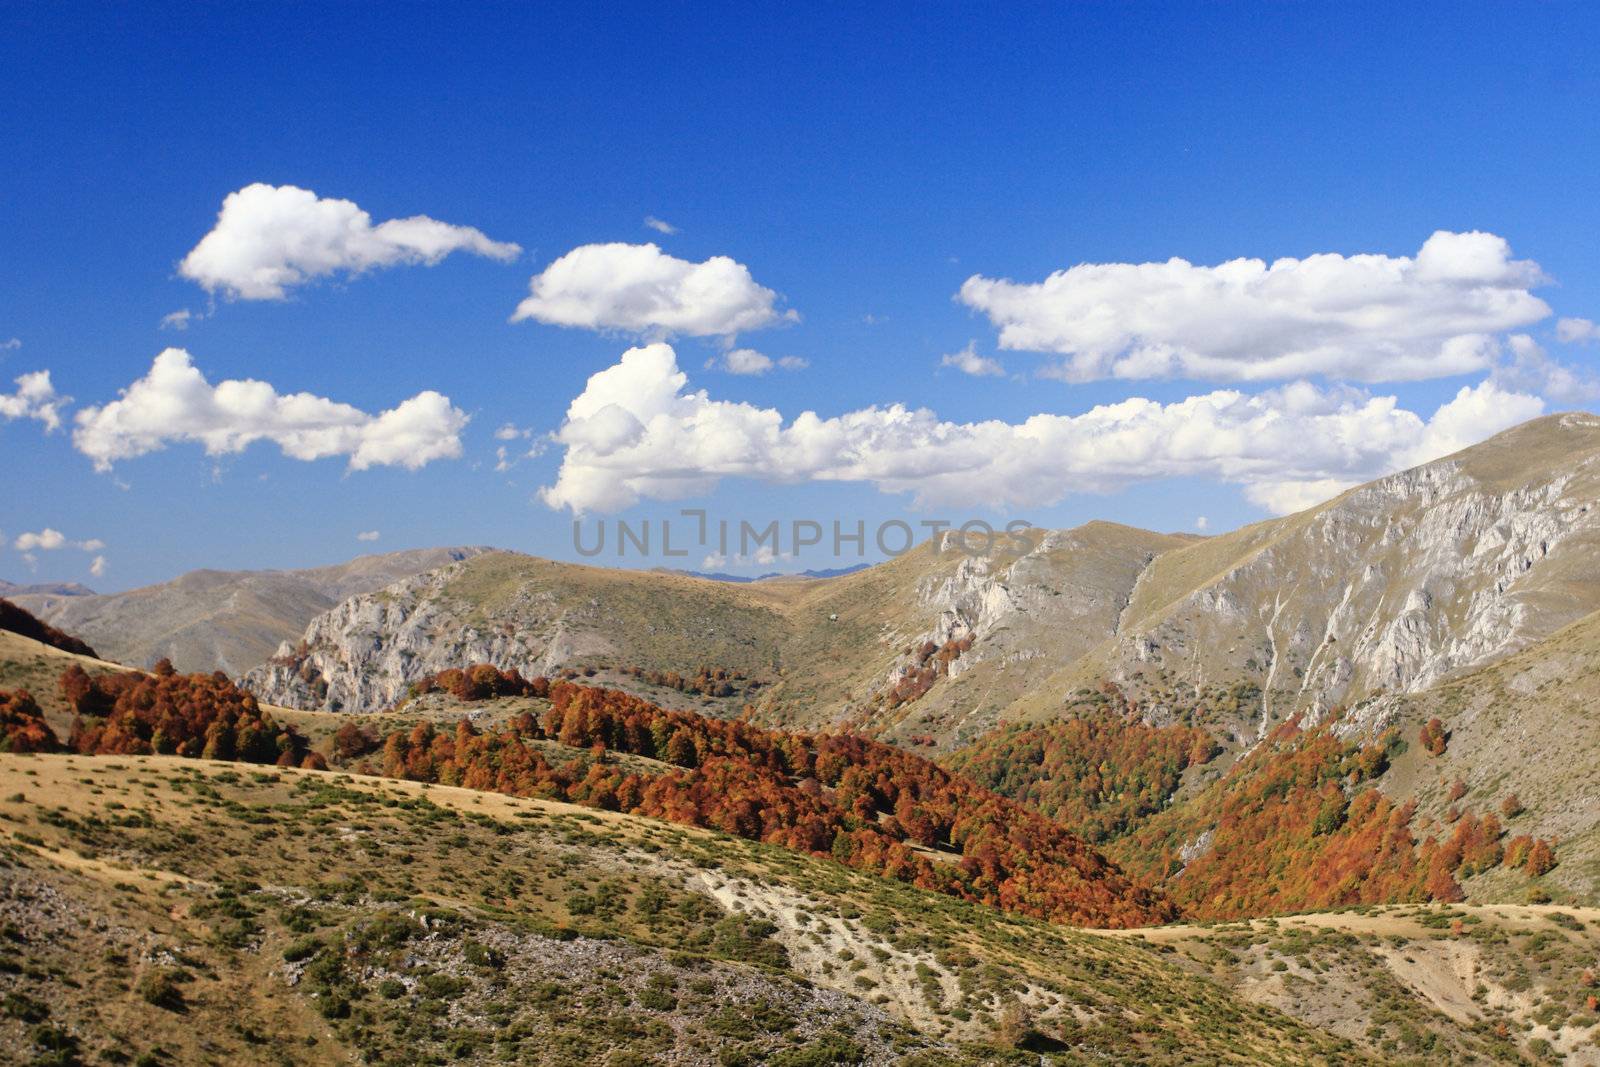 Landscape from the Mavrovo Region in Macedonia